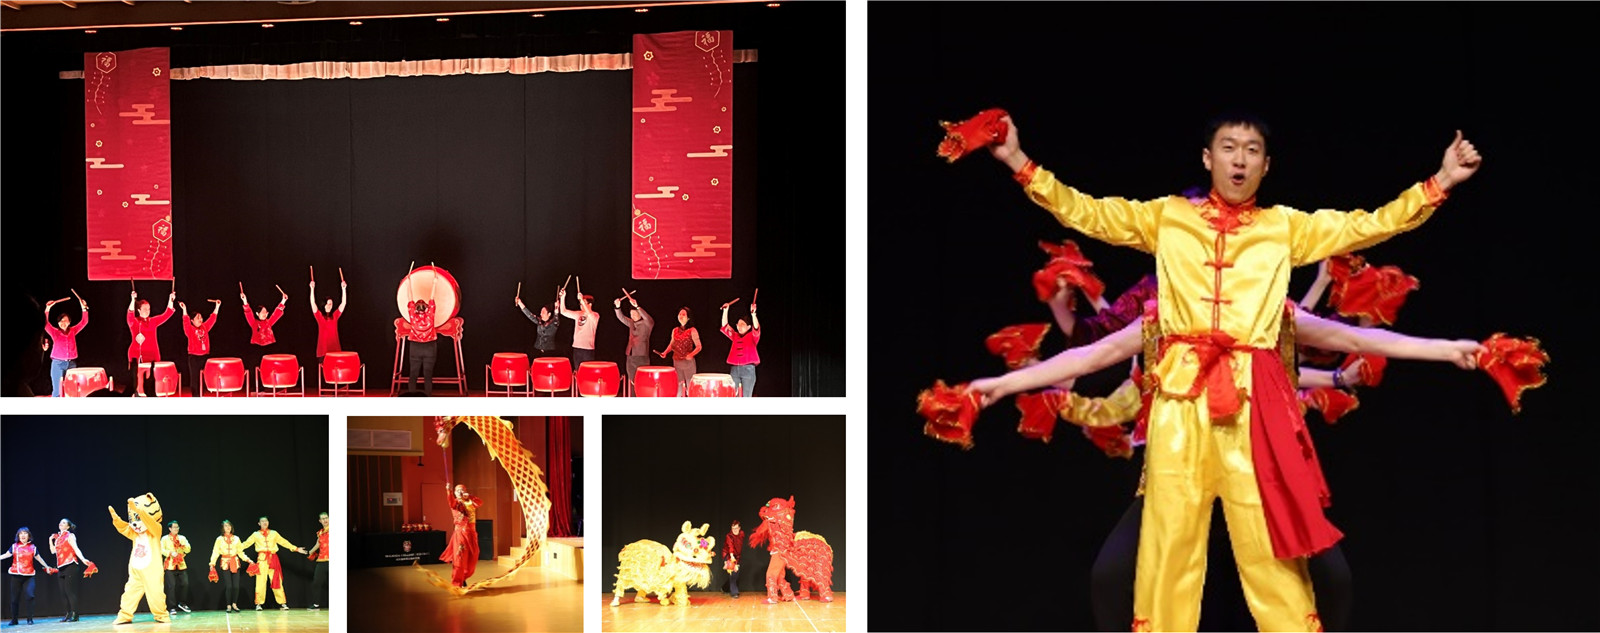 Staff Chinese New Year performances